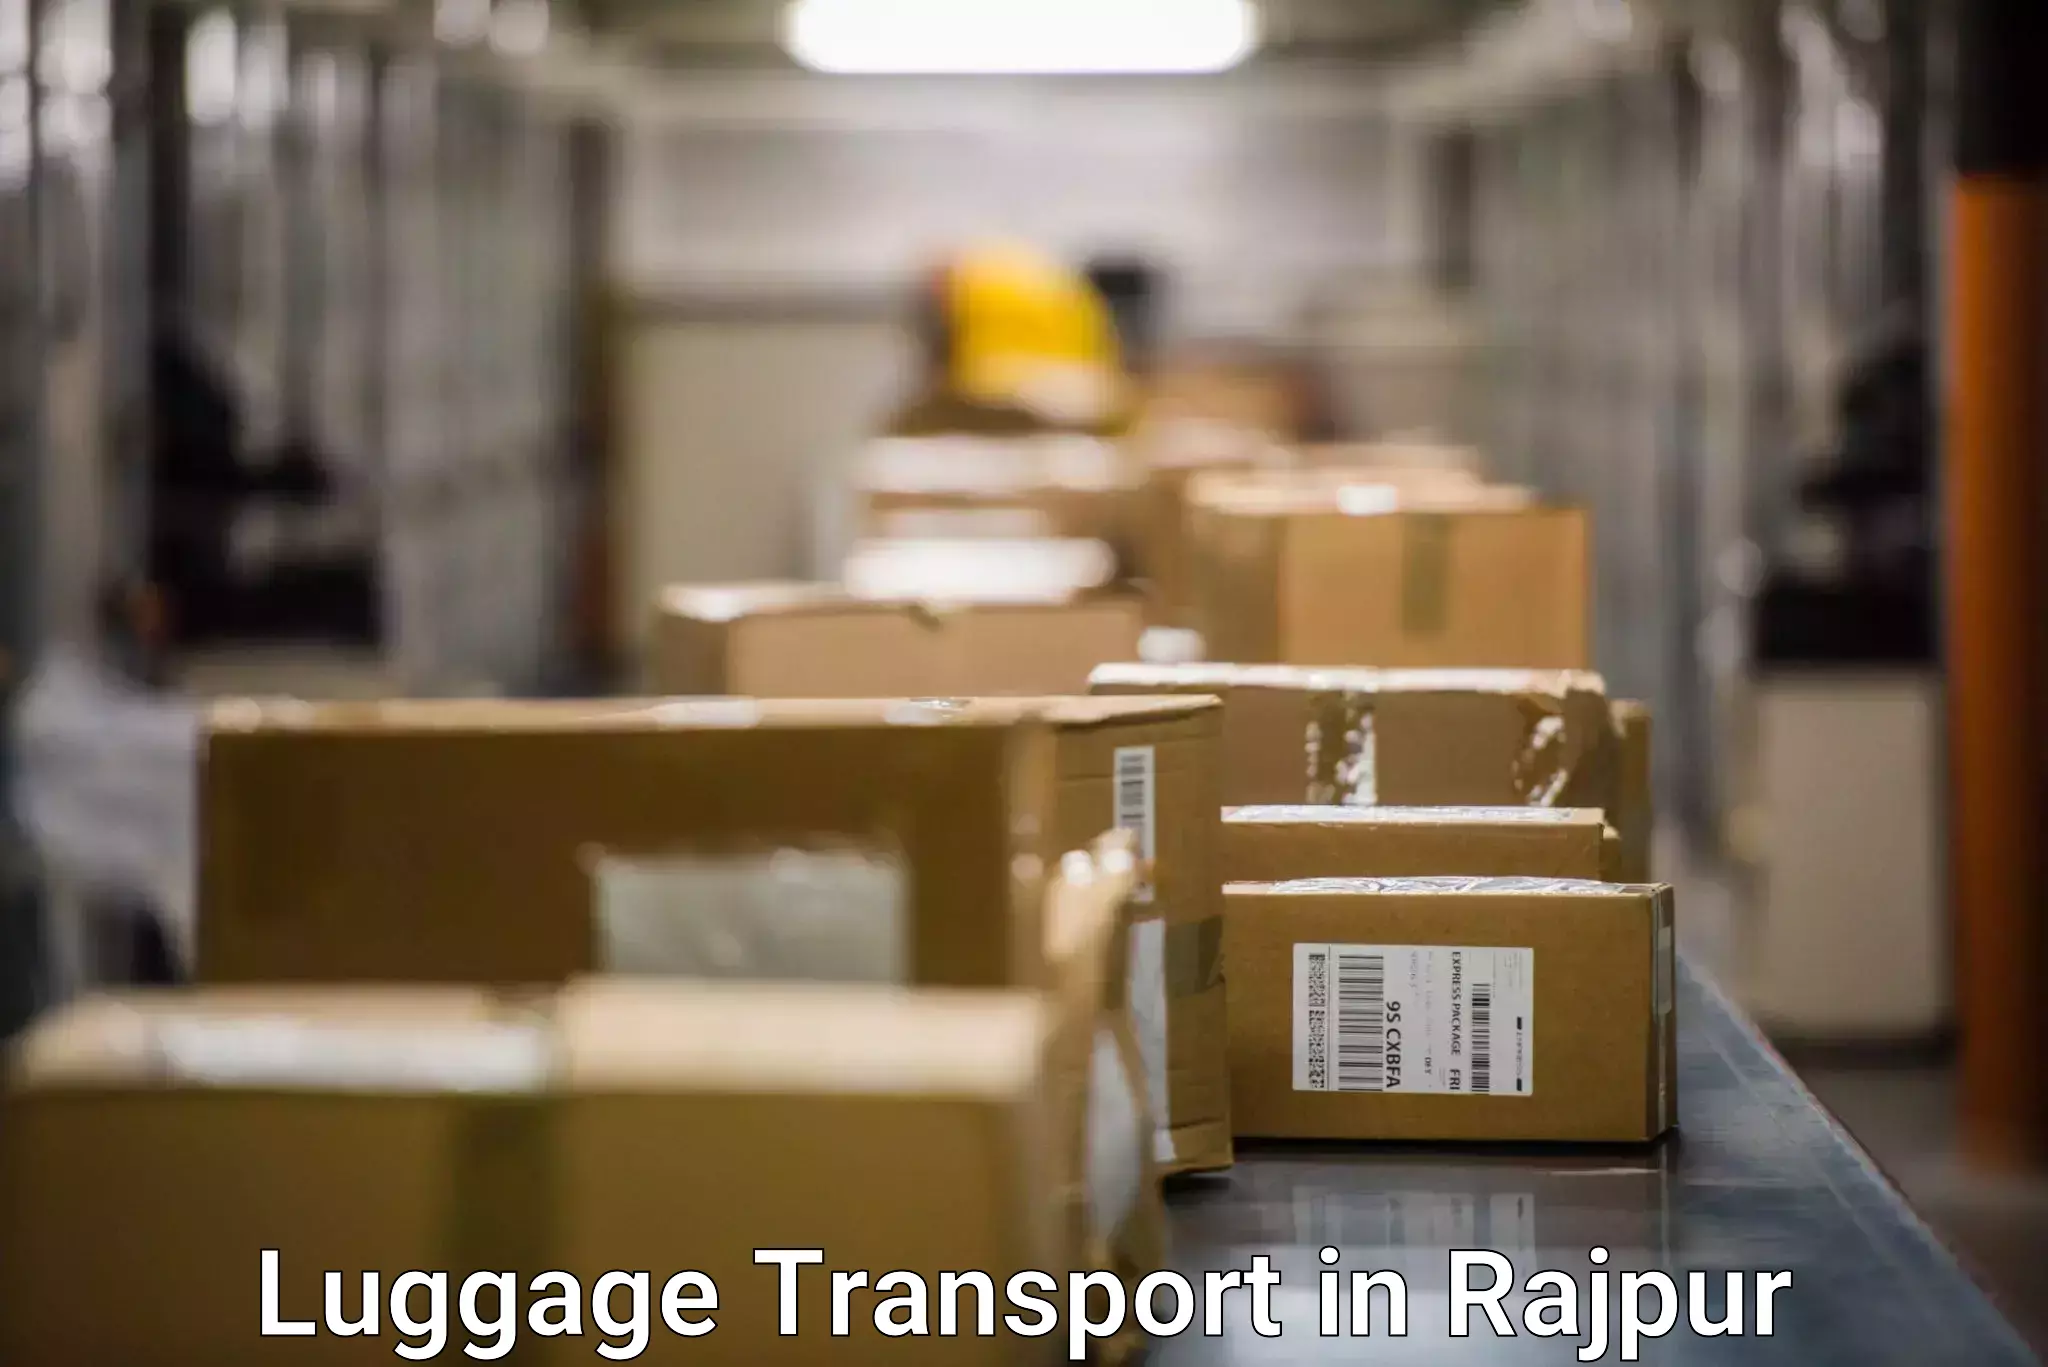 Luggage forwarding service in Rajpur